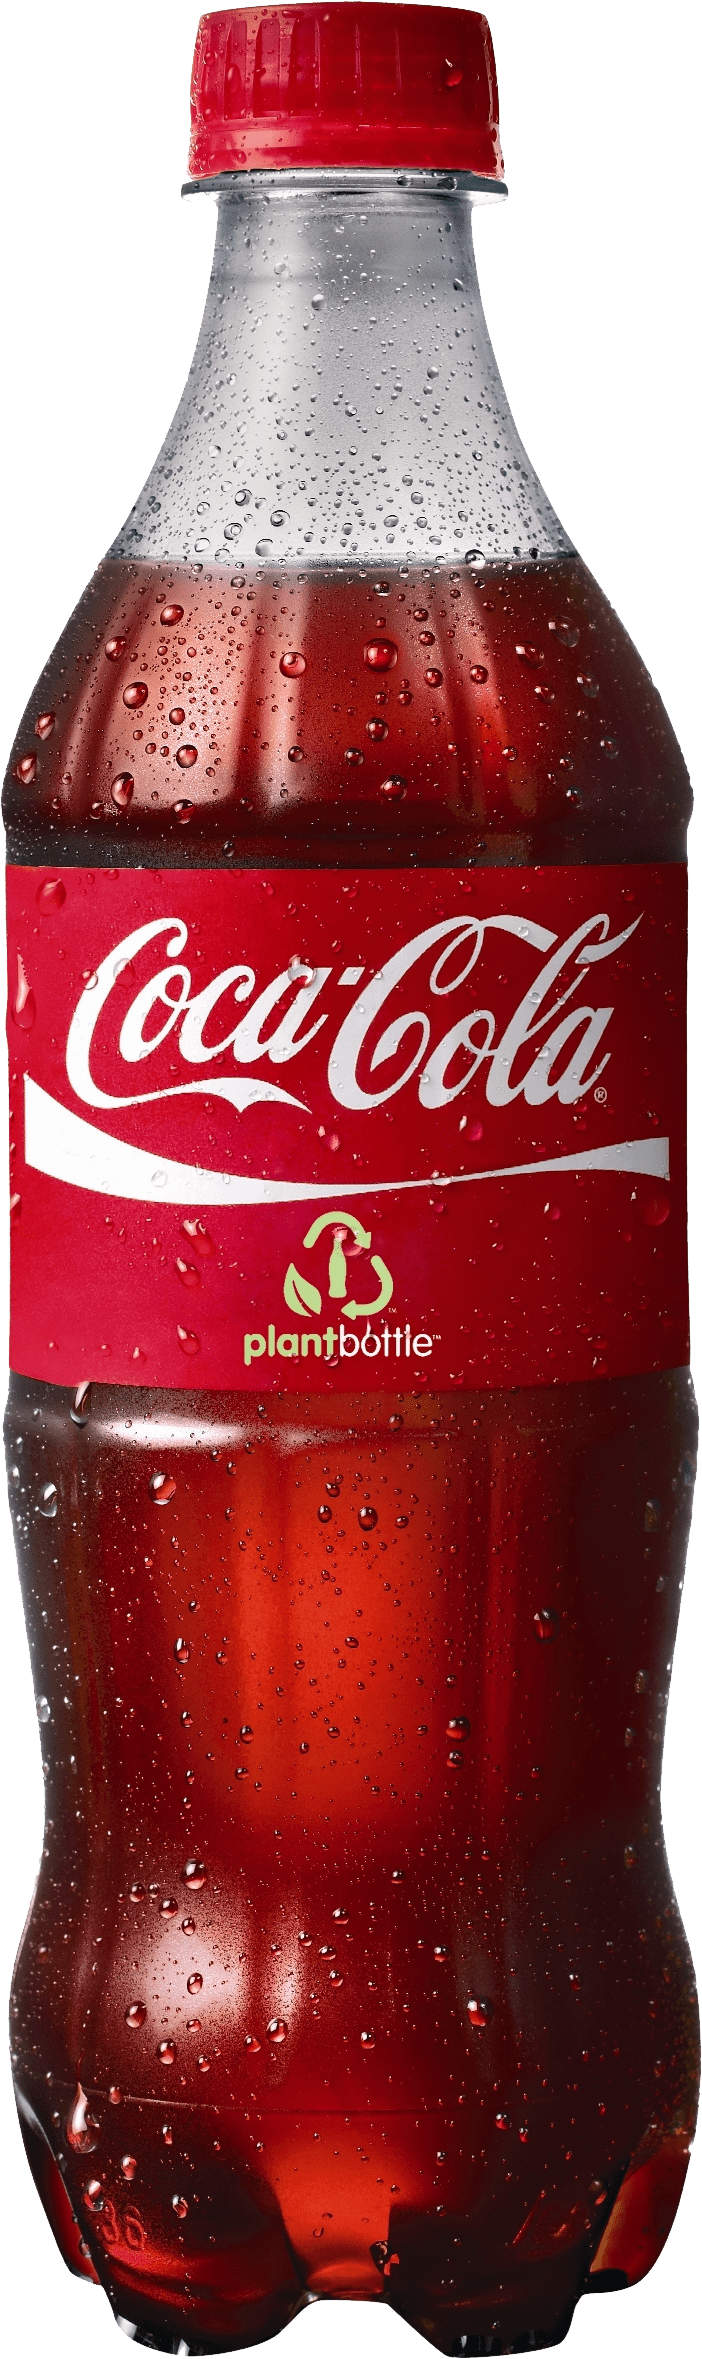 Coca Cola Plant Bottle Product Image PNG image